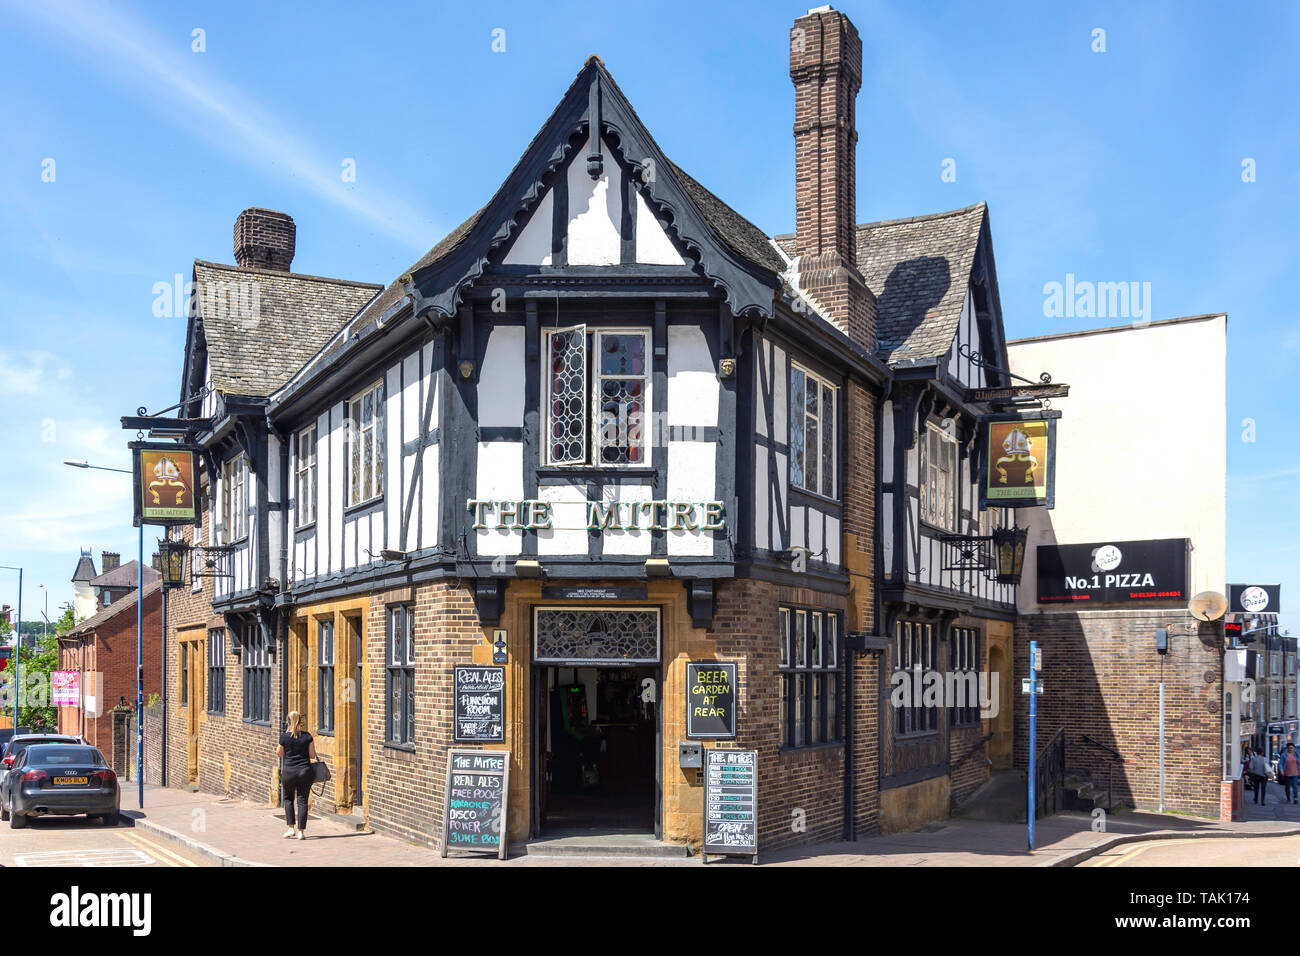 The Mitre Inn, Lower High Street, Stourbridge, West Midlands, England, United Kingdom Stock Photo